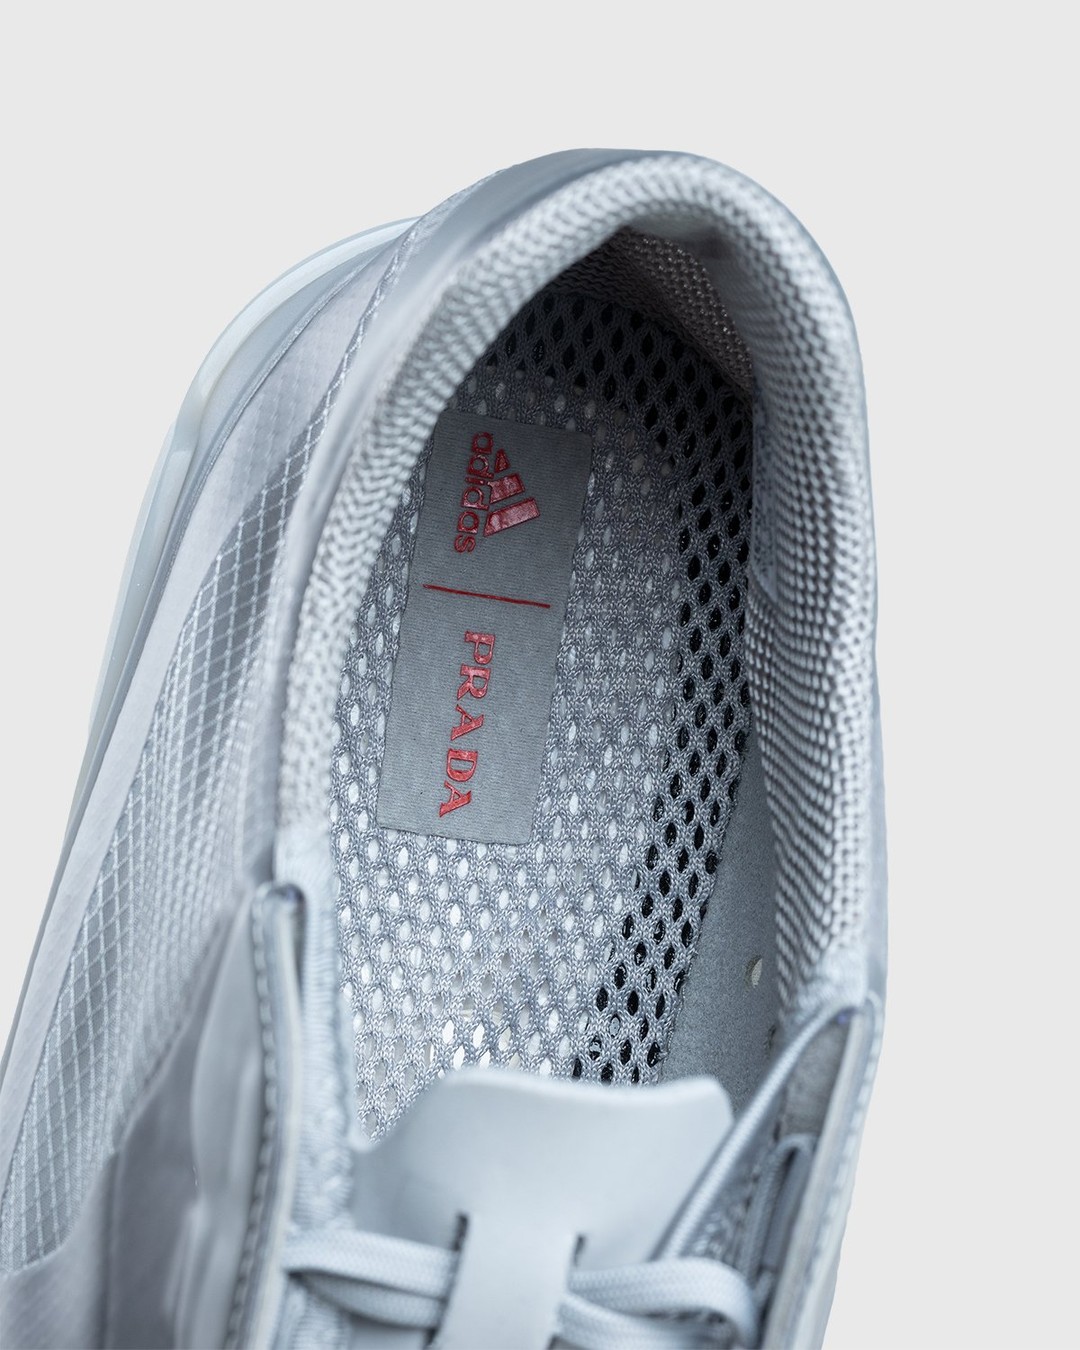 Adidas x Prada – A+P Luna Rossa 21 Performance - Low Top Sneakers - Grey - Image 6